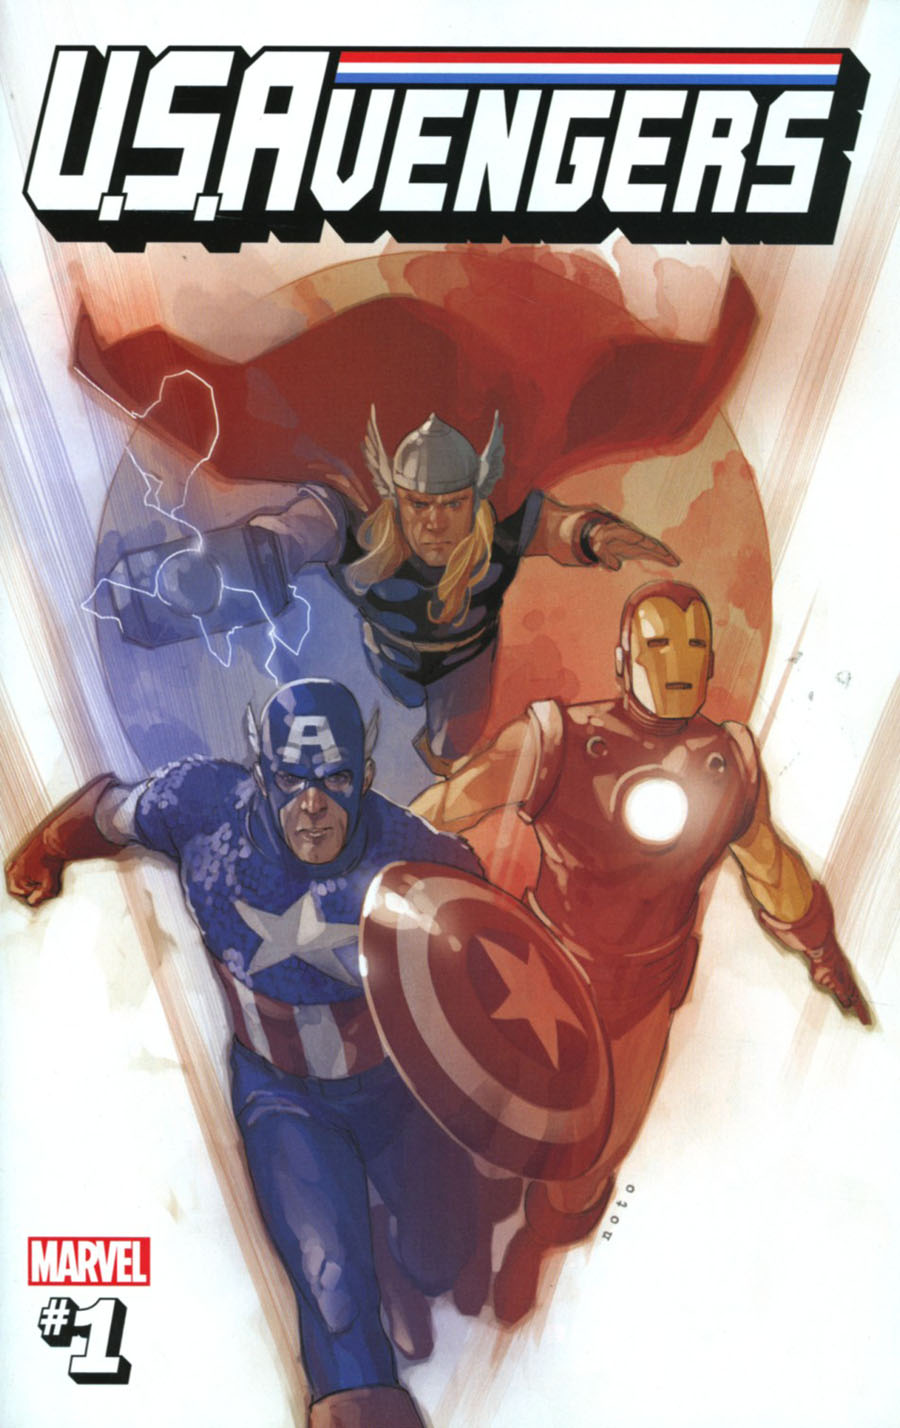 U.S.Avengers #1 Cover Z-Z-L Incentive Phil Noto Secret Variant Cover